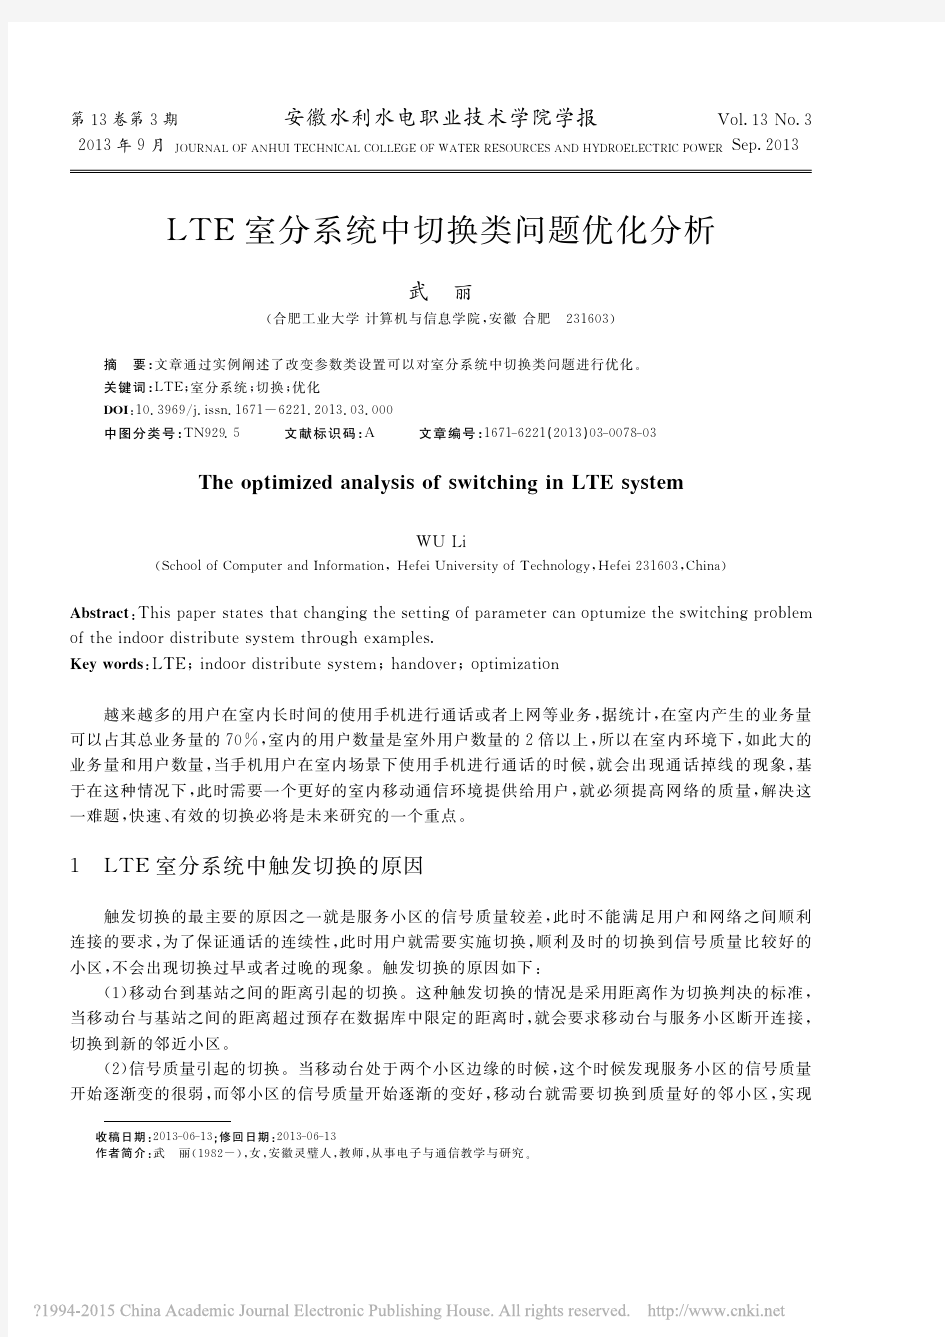 LTE室分系统中切换类问题优化分析_武丽